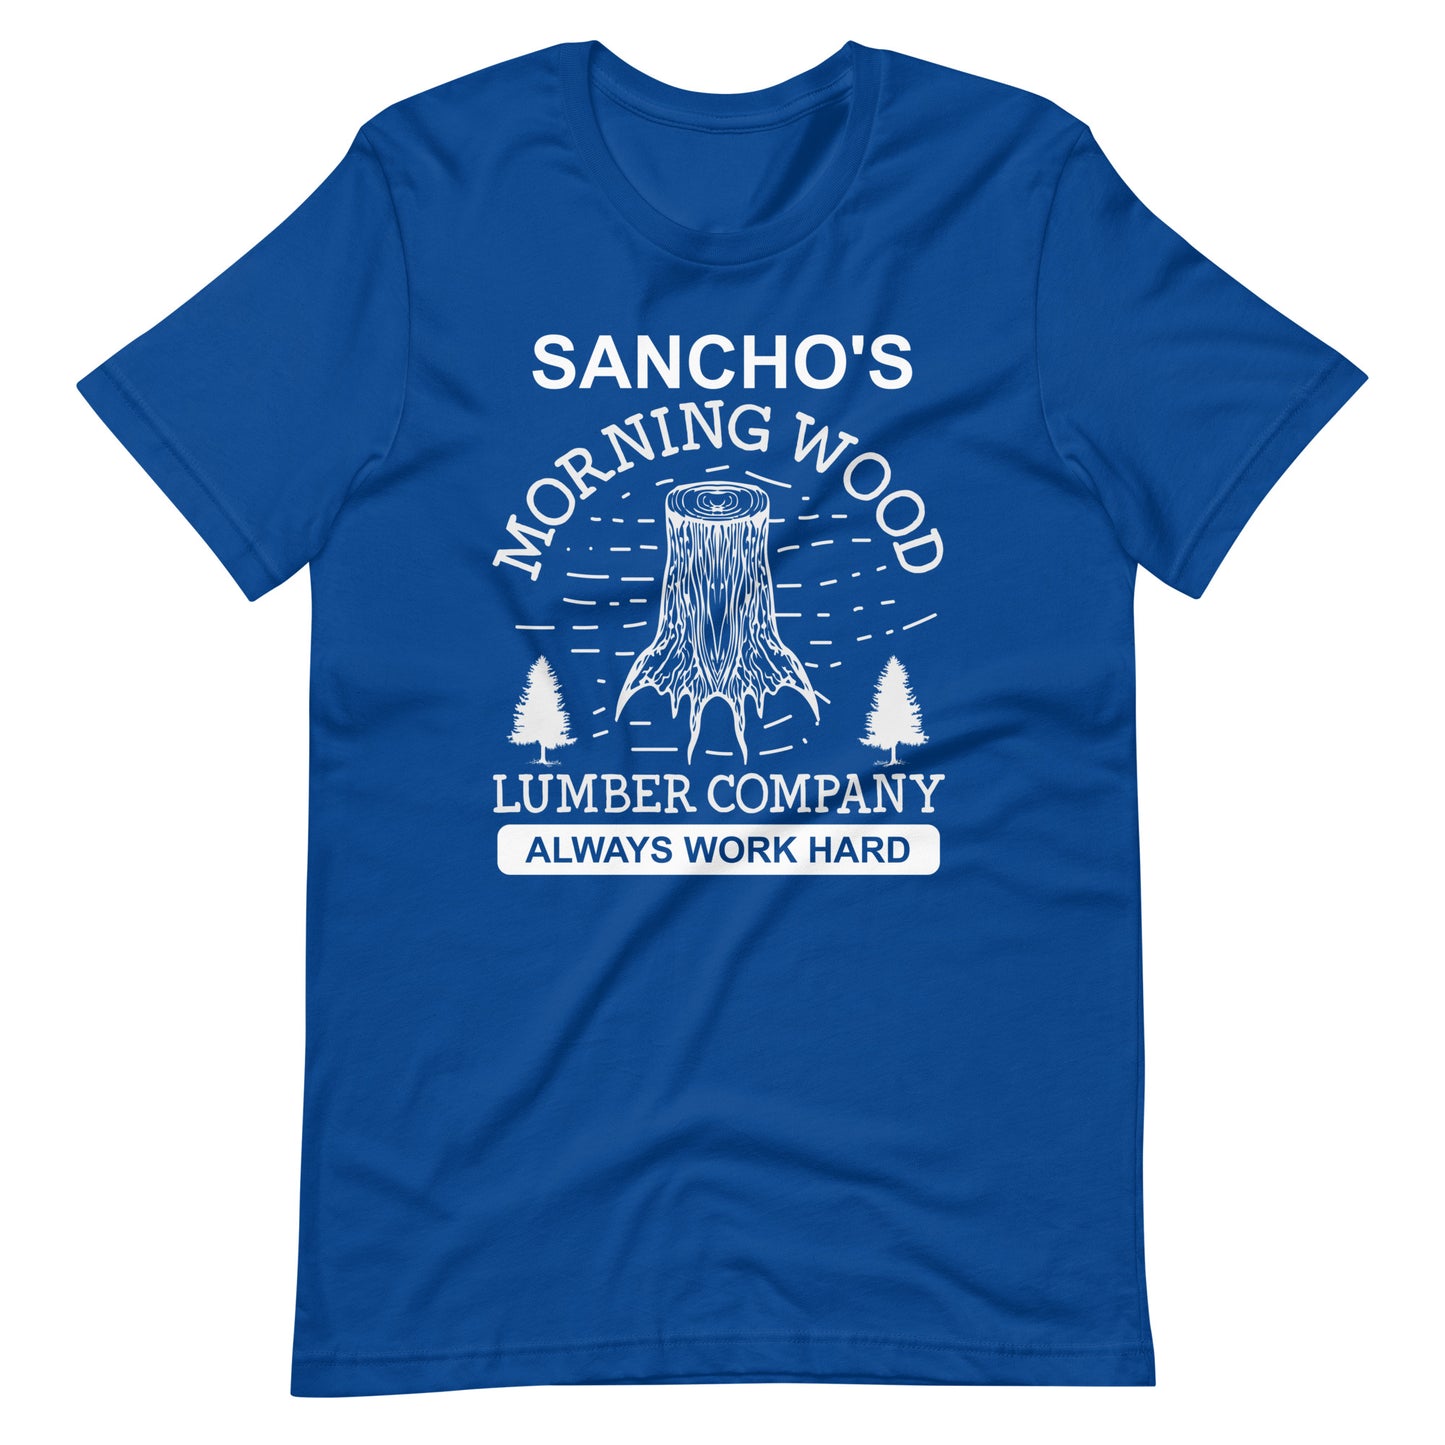 Sancho's Morning Wood Lumber Company T-Shirt